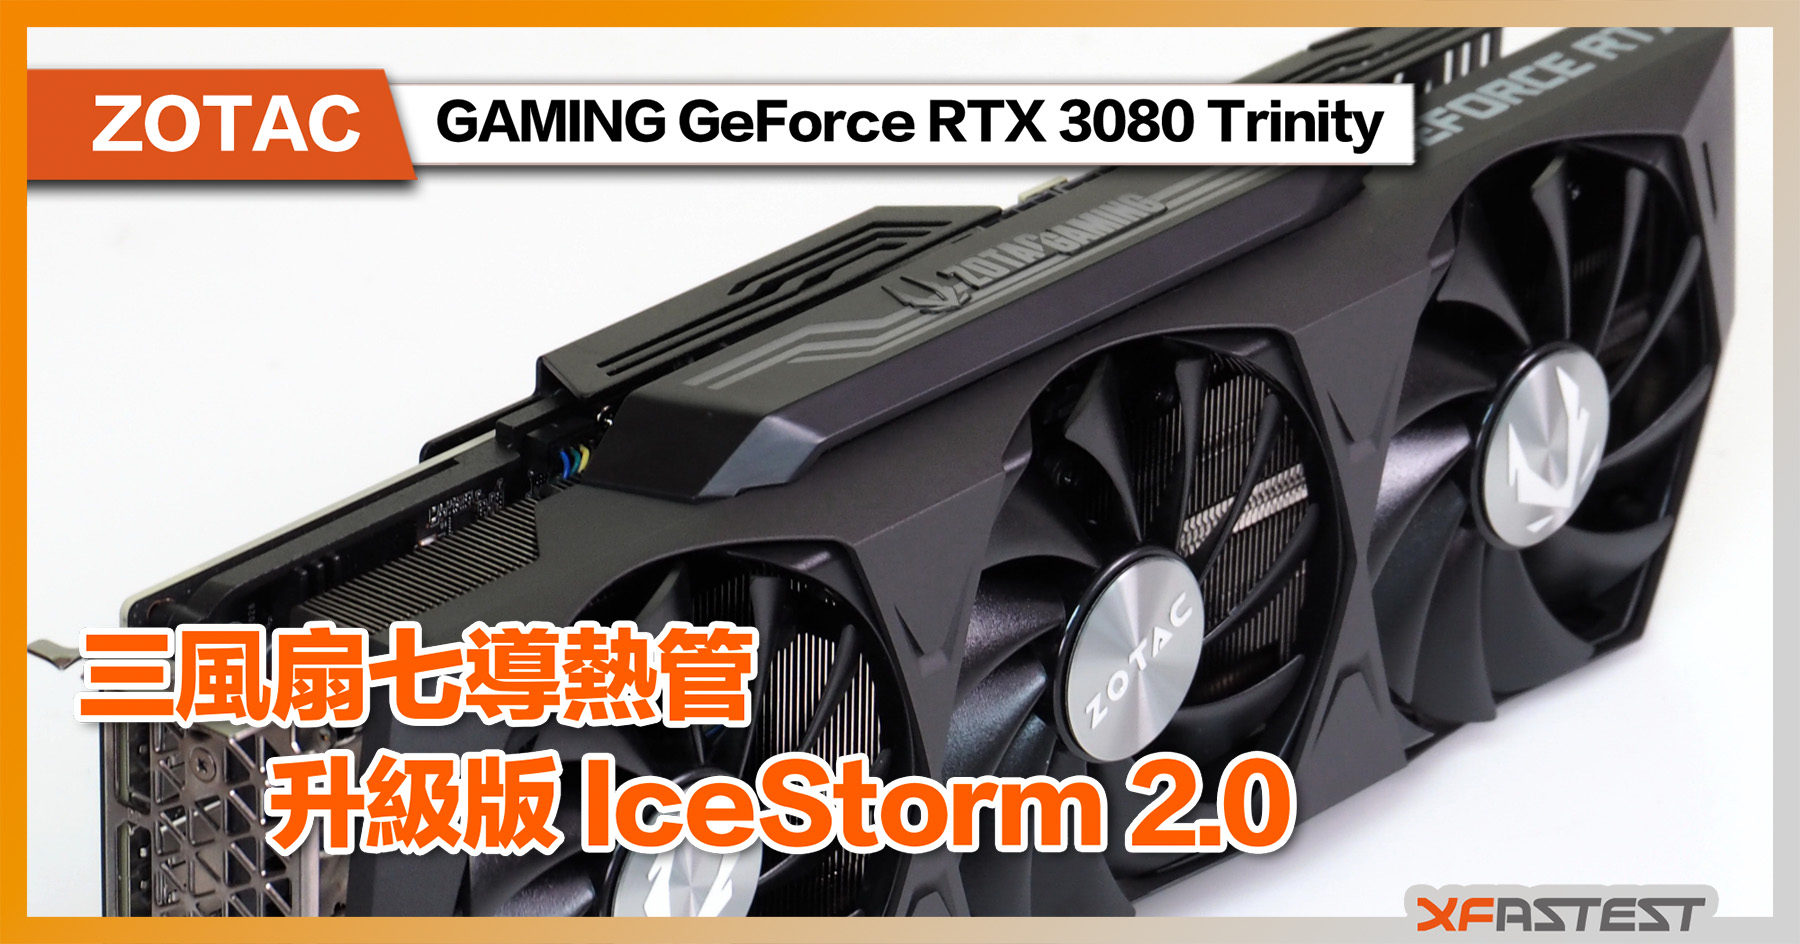 XF 開箱] 升級版IceStorm 2.0 三風扇七導熱管ZOTAC GAMING GeForce RTX 3080 Trinity  XFastest Hong Kong